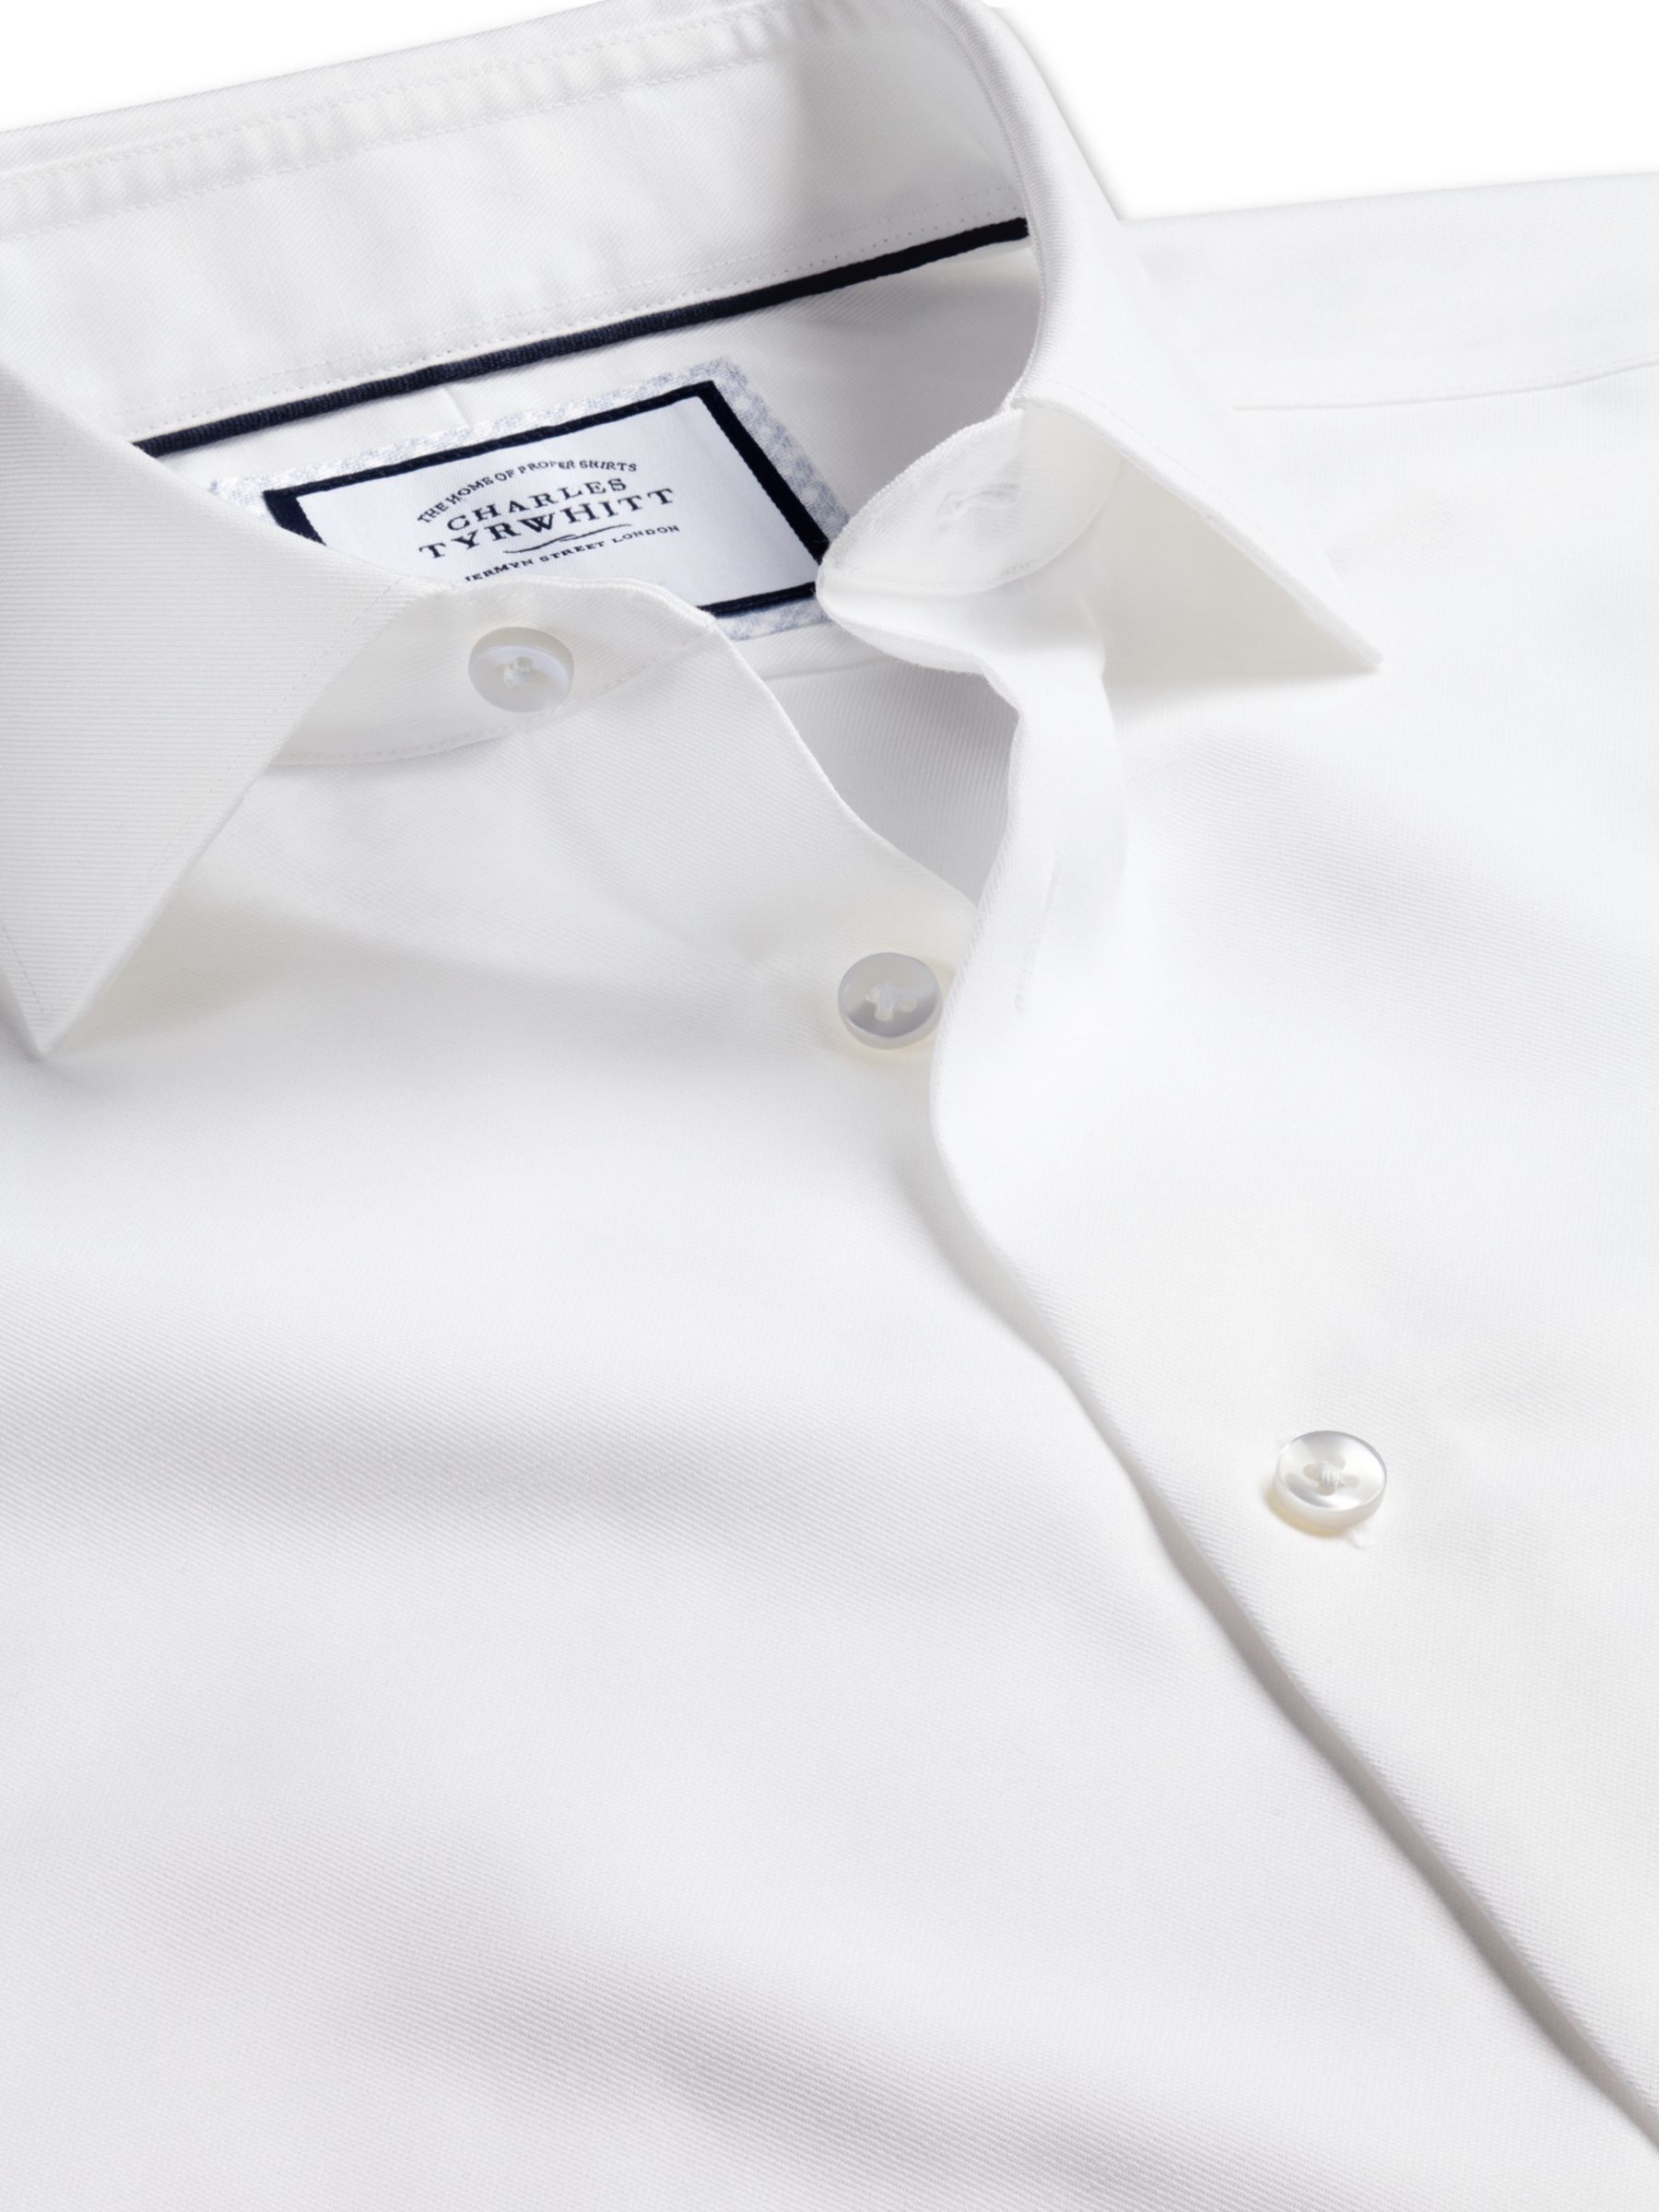 Charles Tyrwhitt Non-Iron Cotton Linen Plain Slim Fit Shirt, White, 16.5